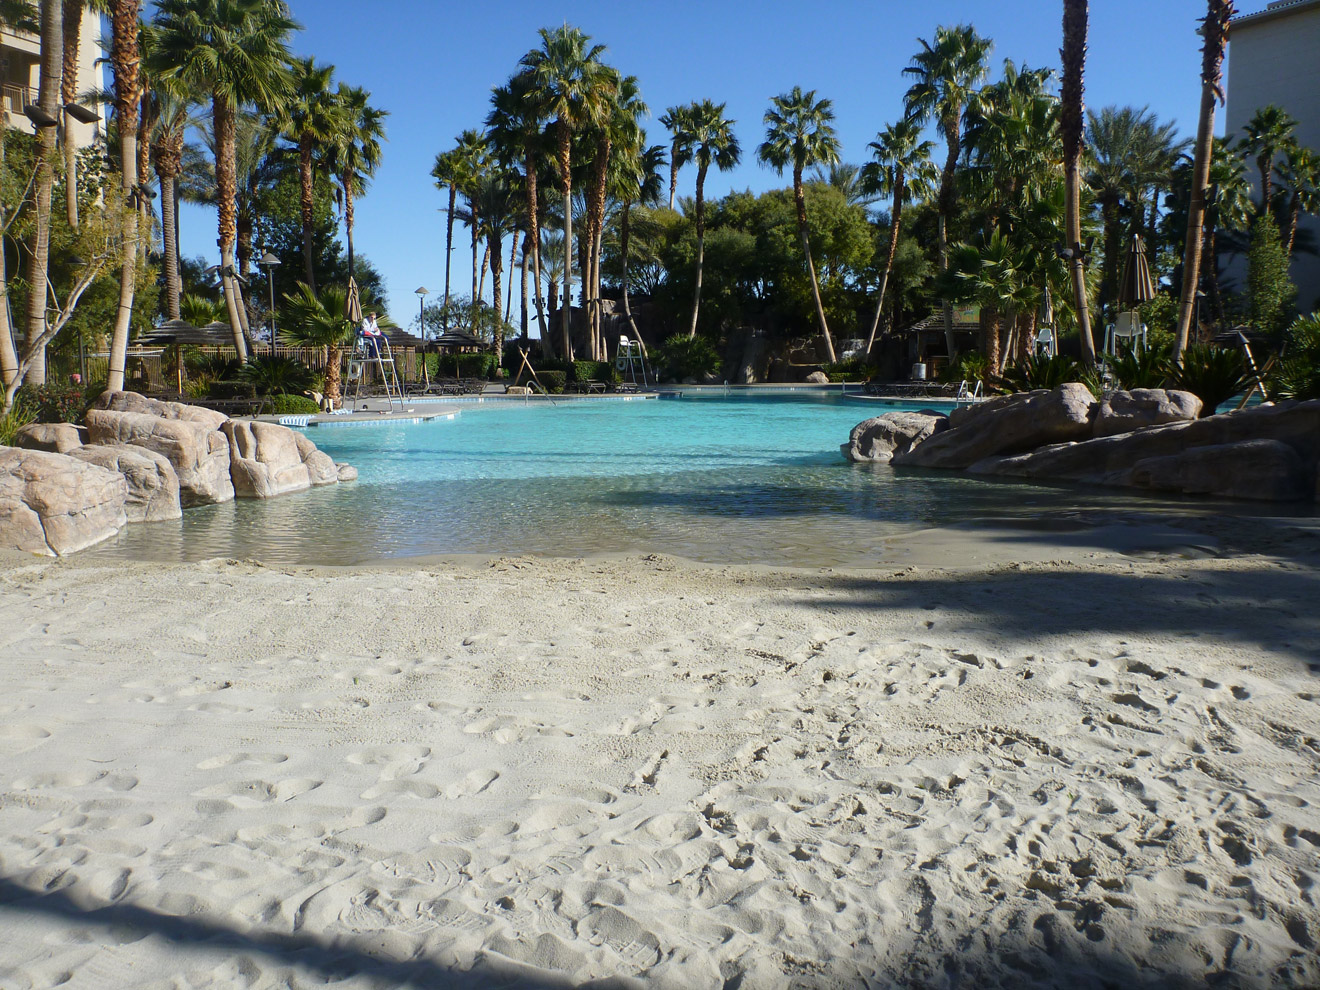 Grand Pool Complex  Vegas pools, Las vegas pool, Las vegas vacation